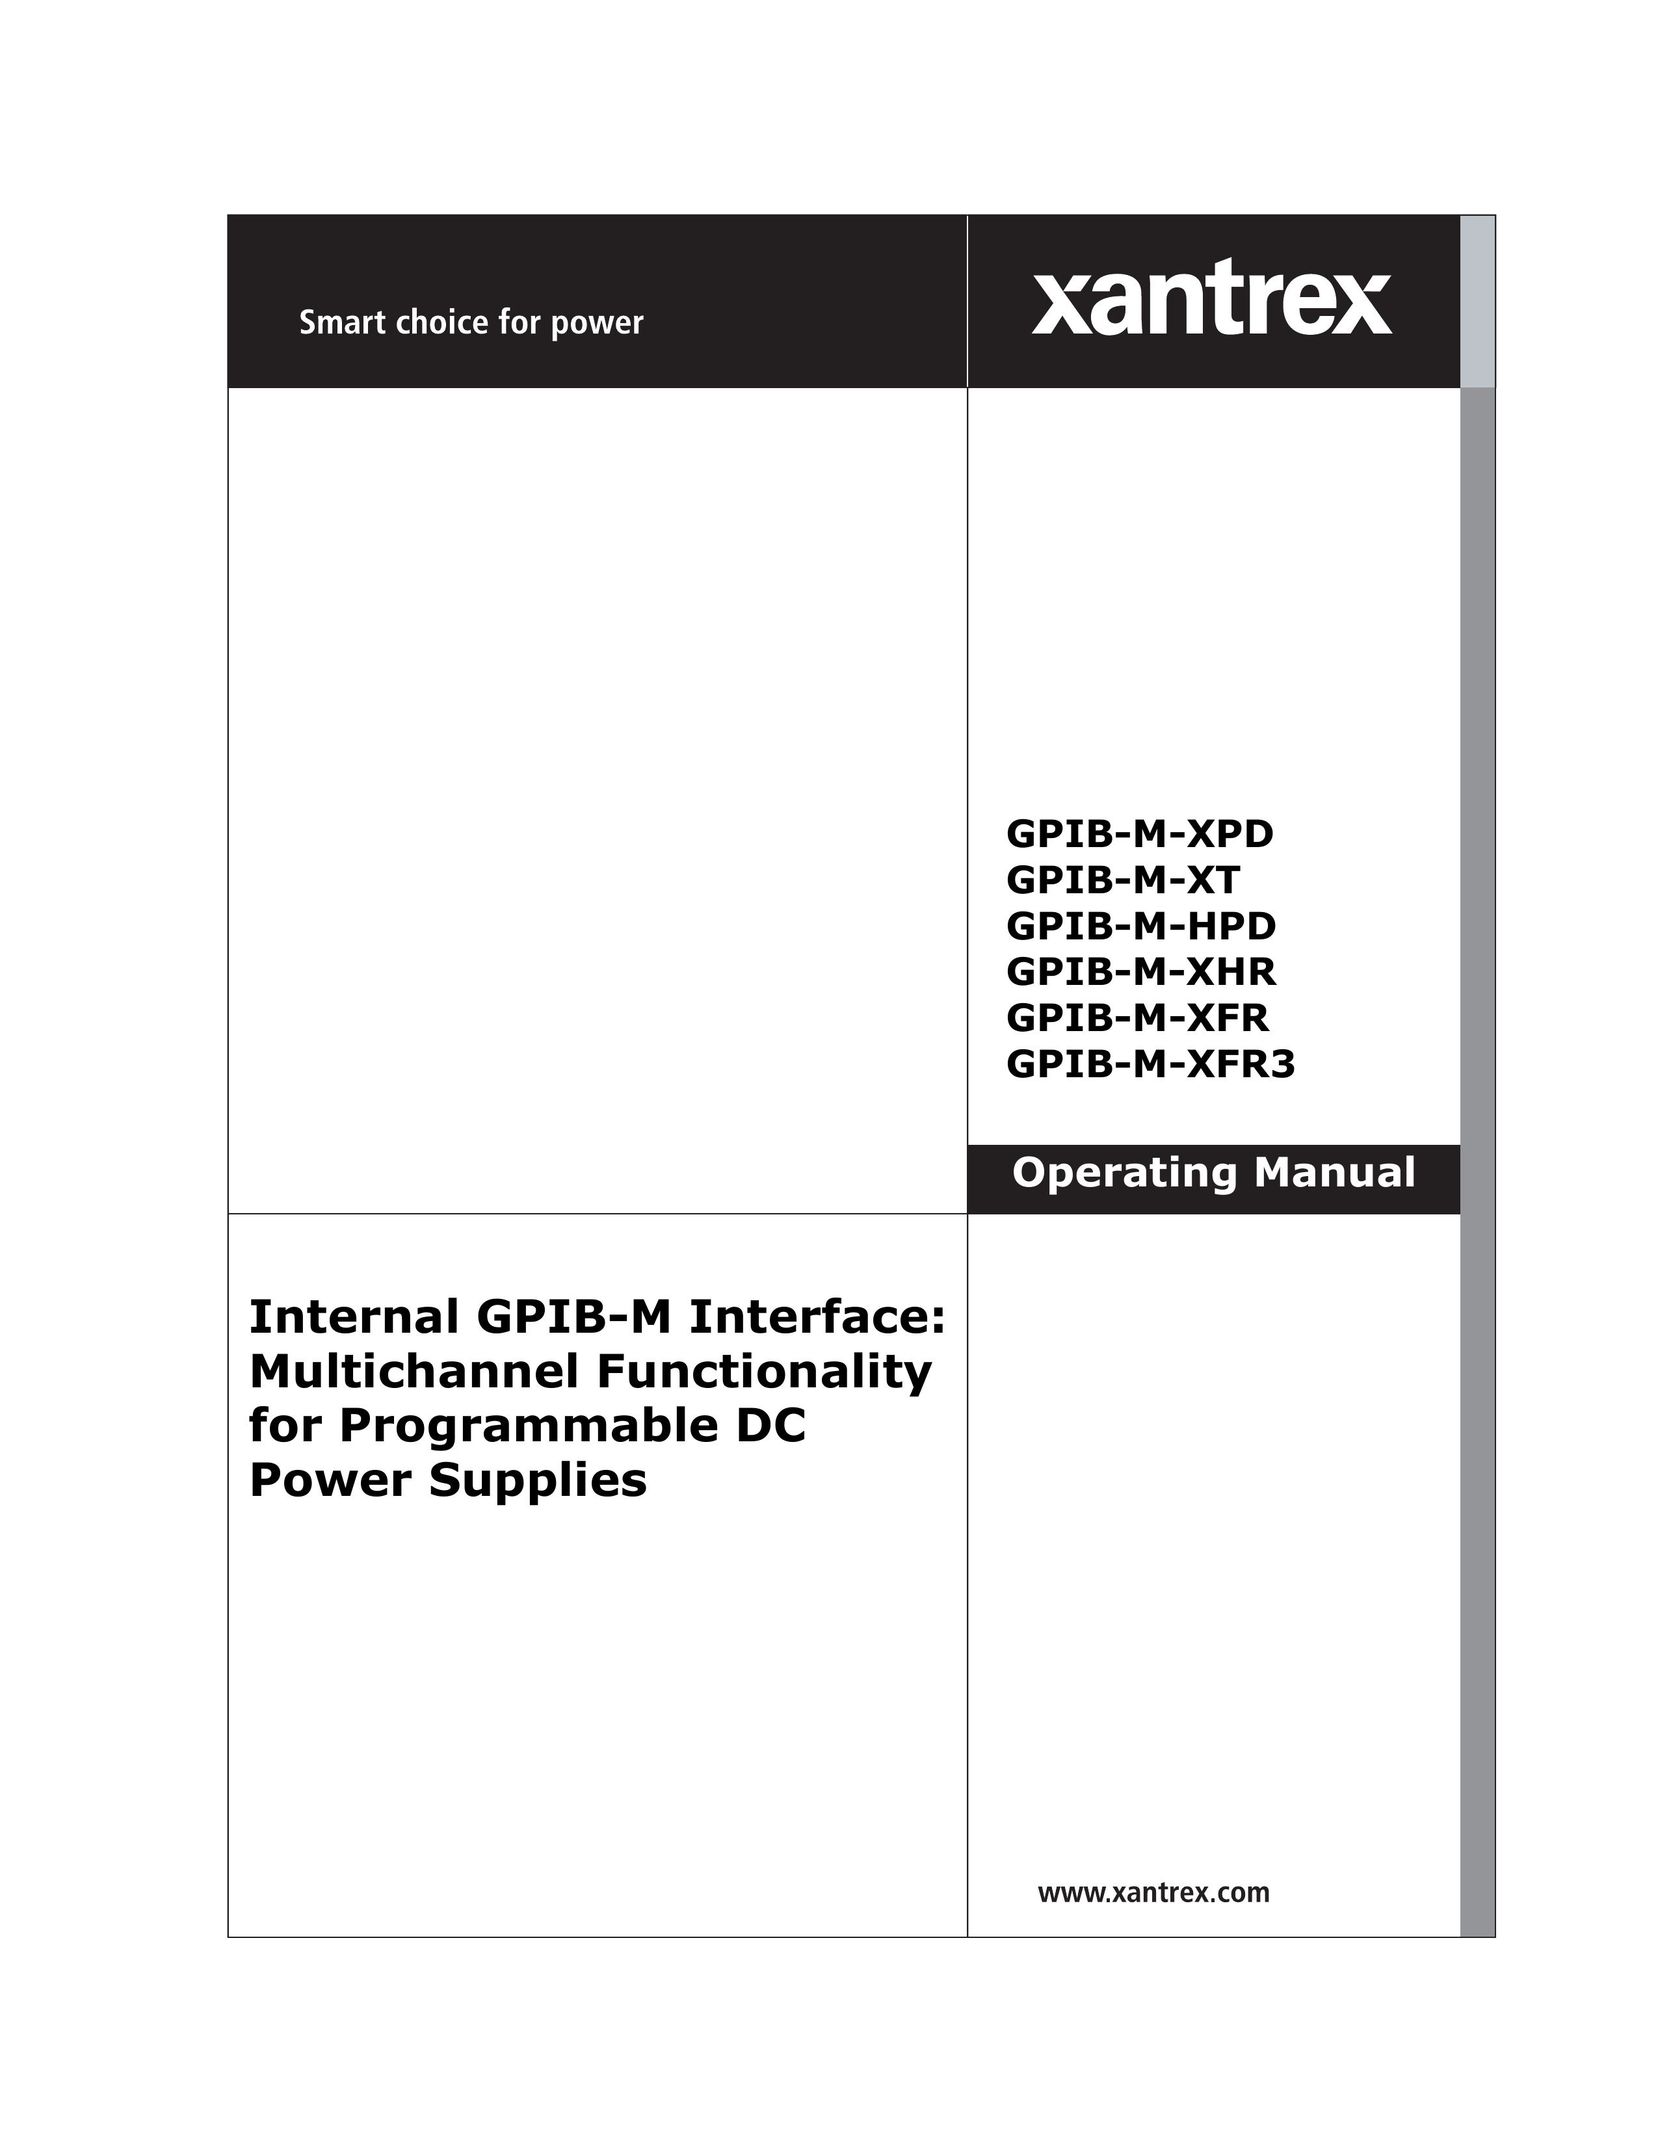 Xantrex Technology GPIB-M-HPD Power Supply User Manual